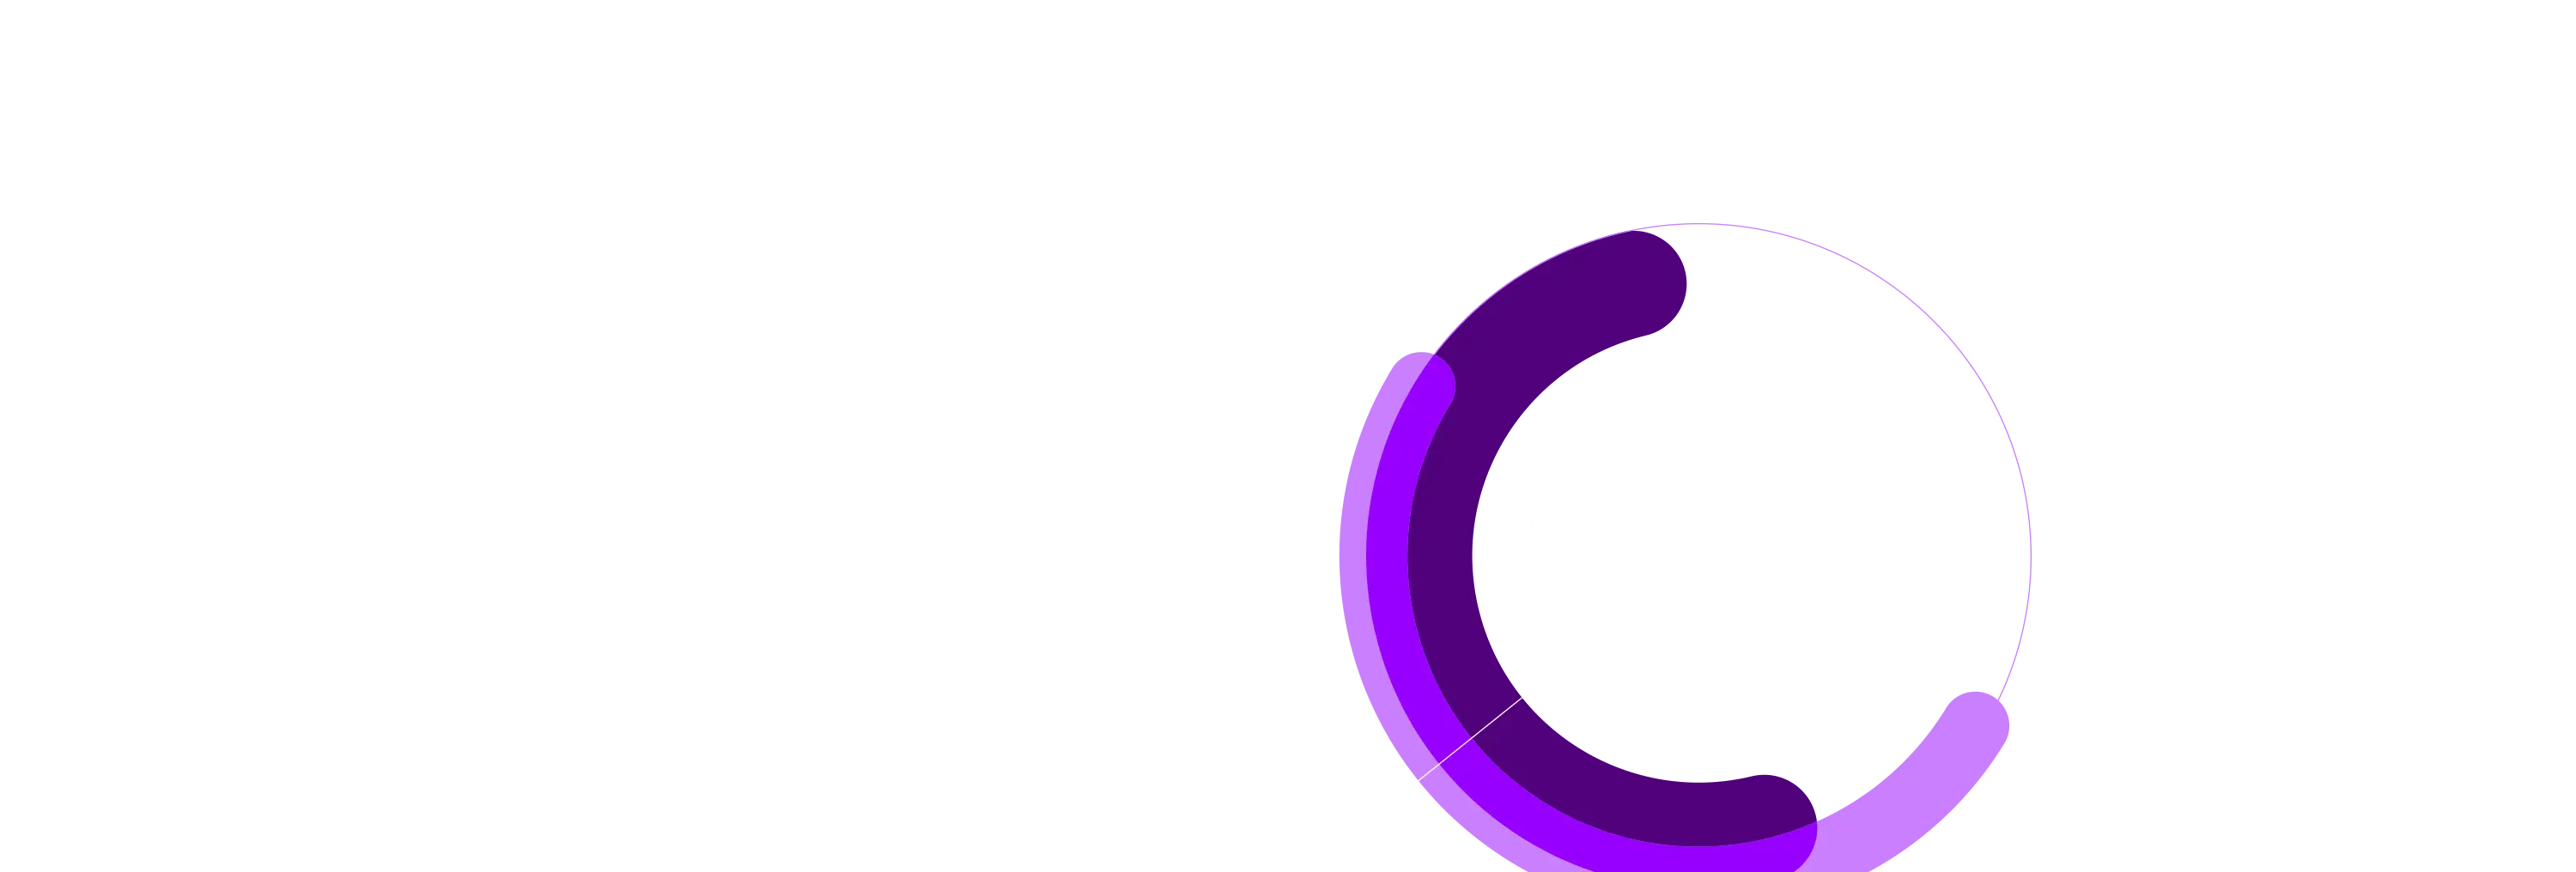 half circular motion in purple illustration